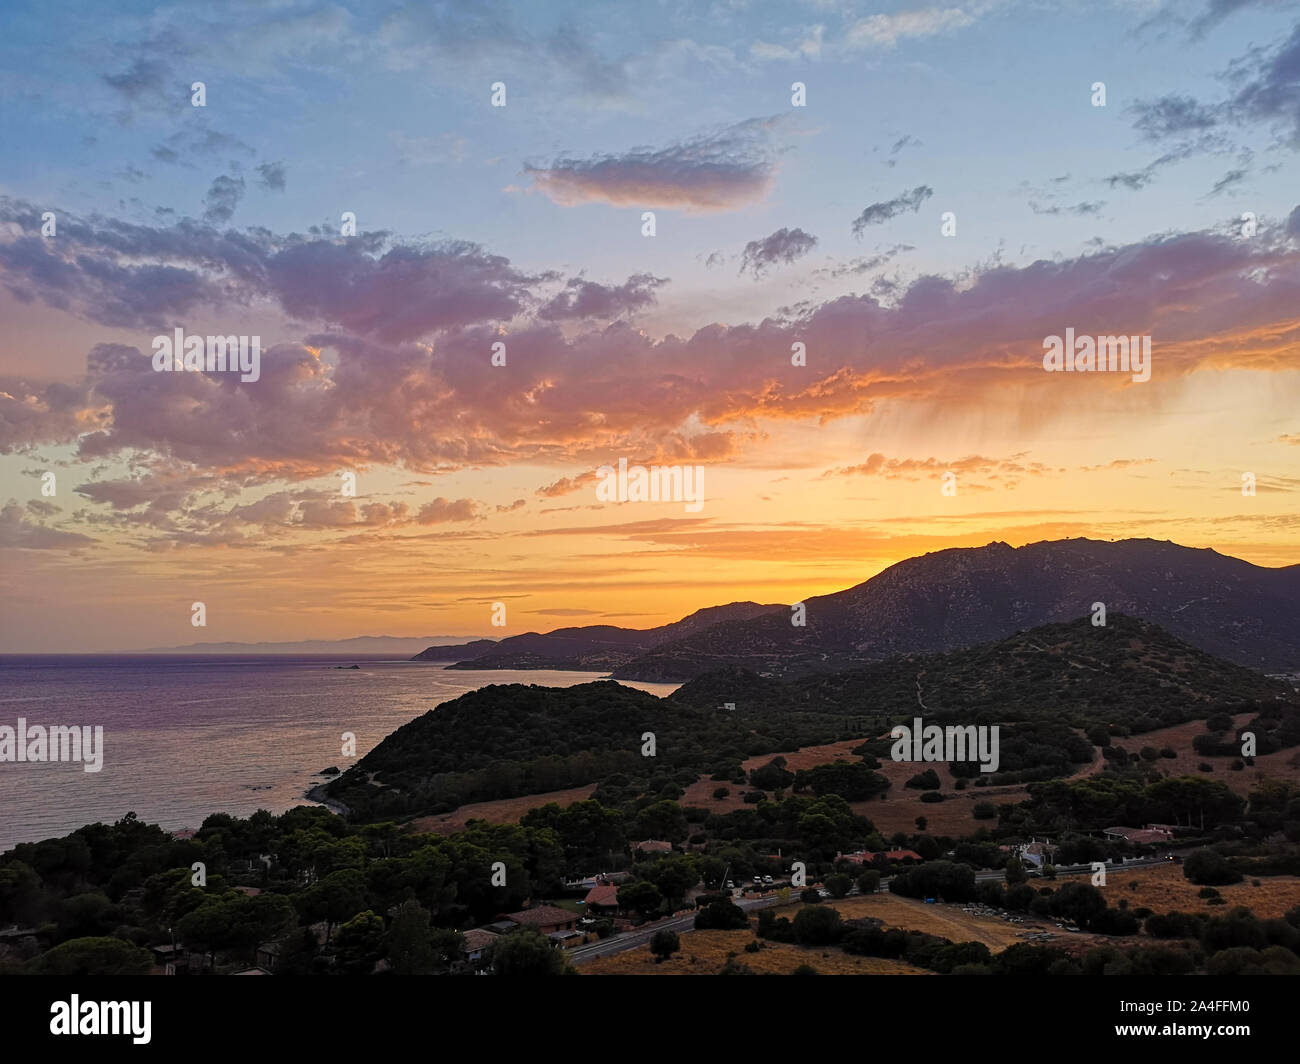 Cape Carbonara panorama at sunset. It is a famous tourist resort near Villasimius, Sardinia, Italy. Stock Photo